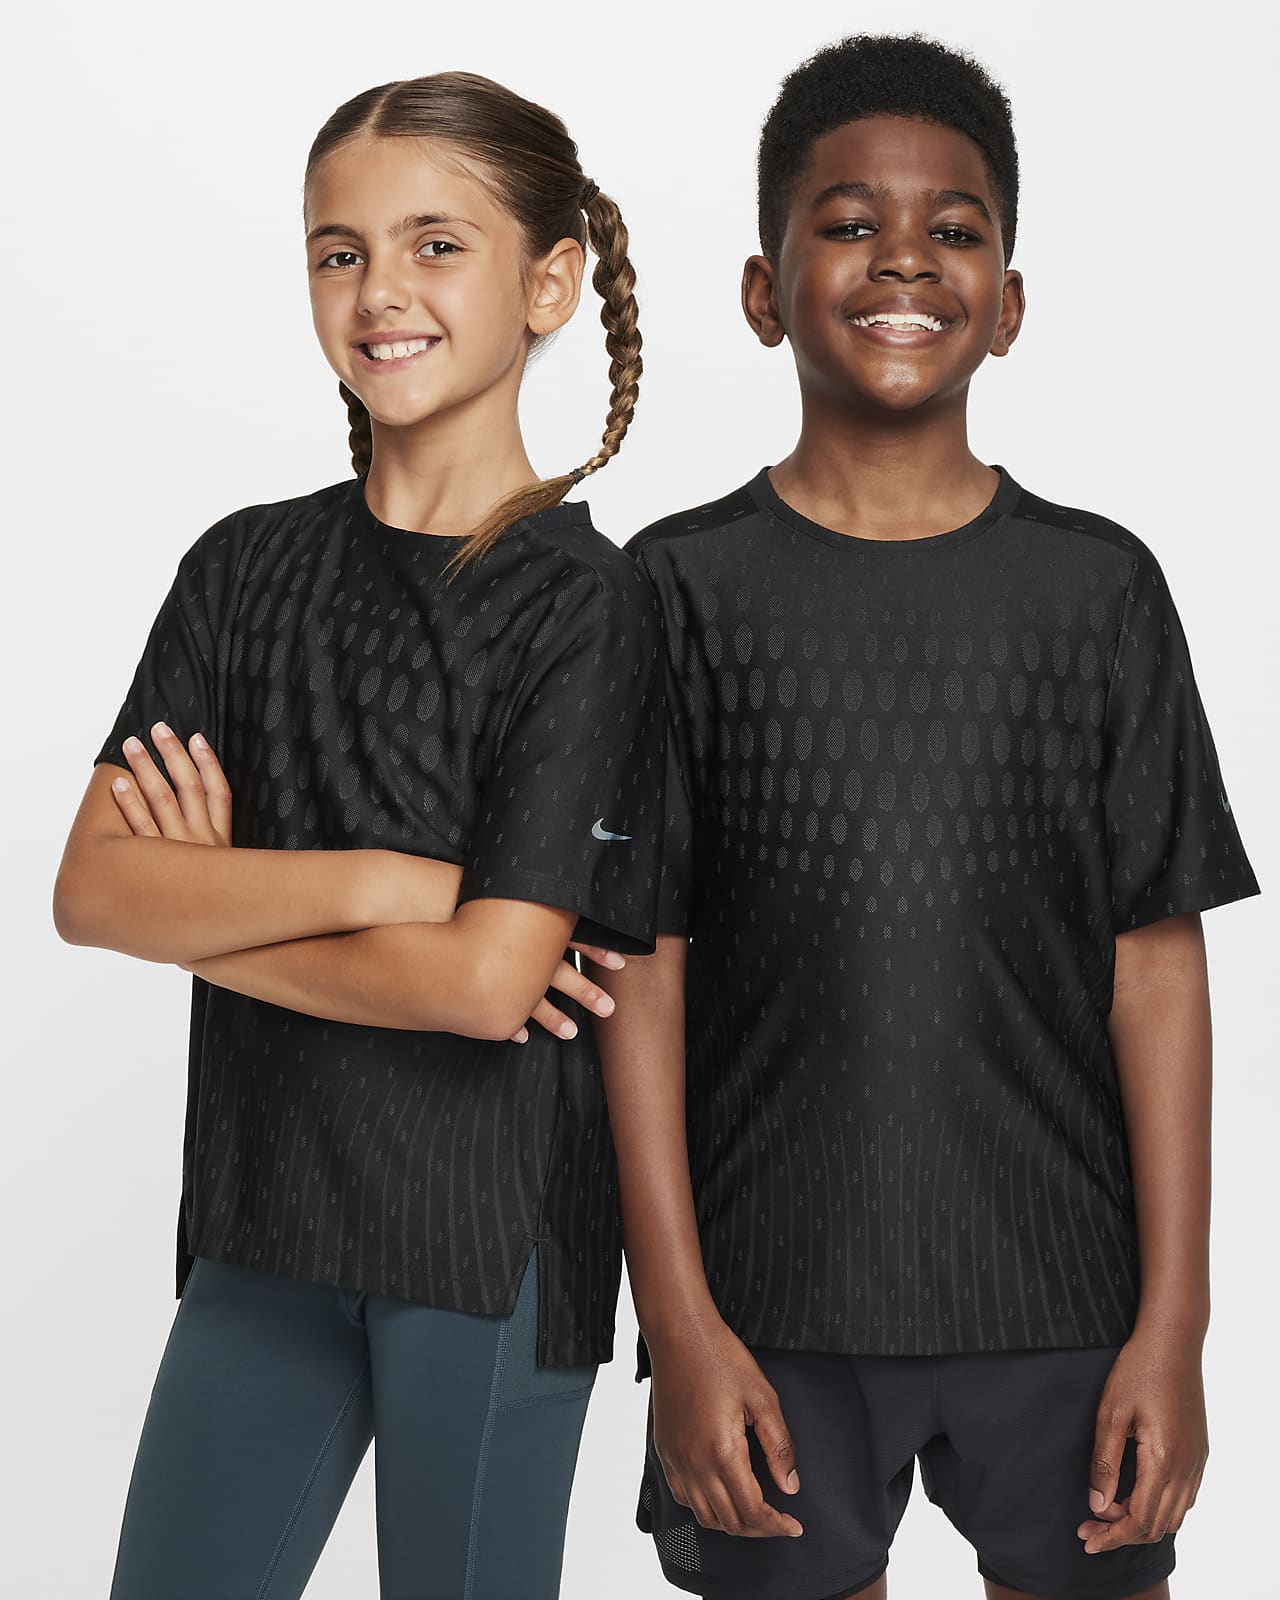 Träningströja Nike Multi Tech Dri-FIT ADV för ungdom (killar)